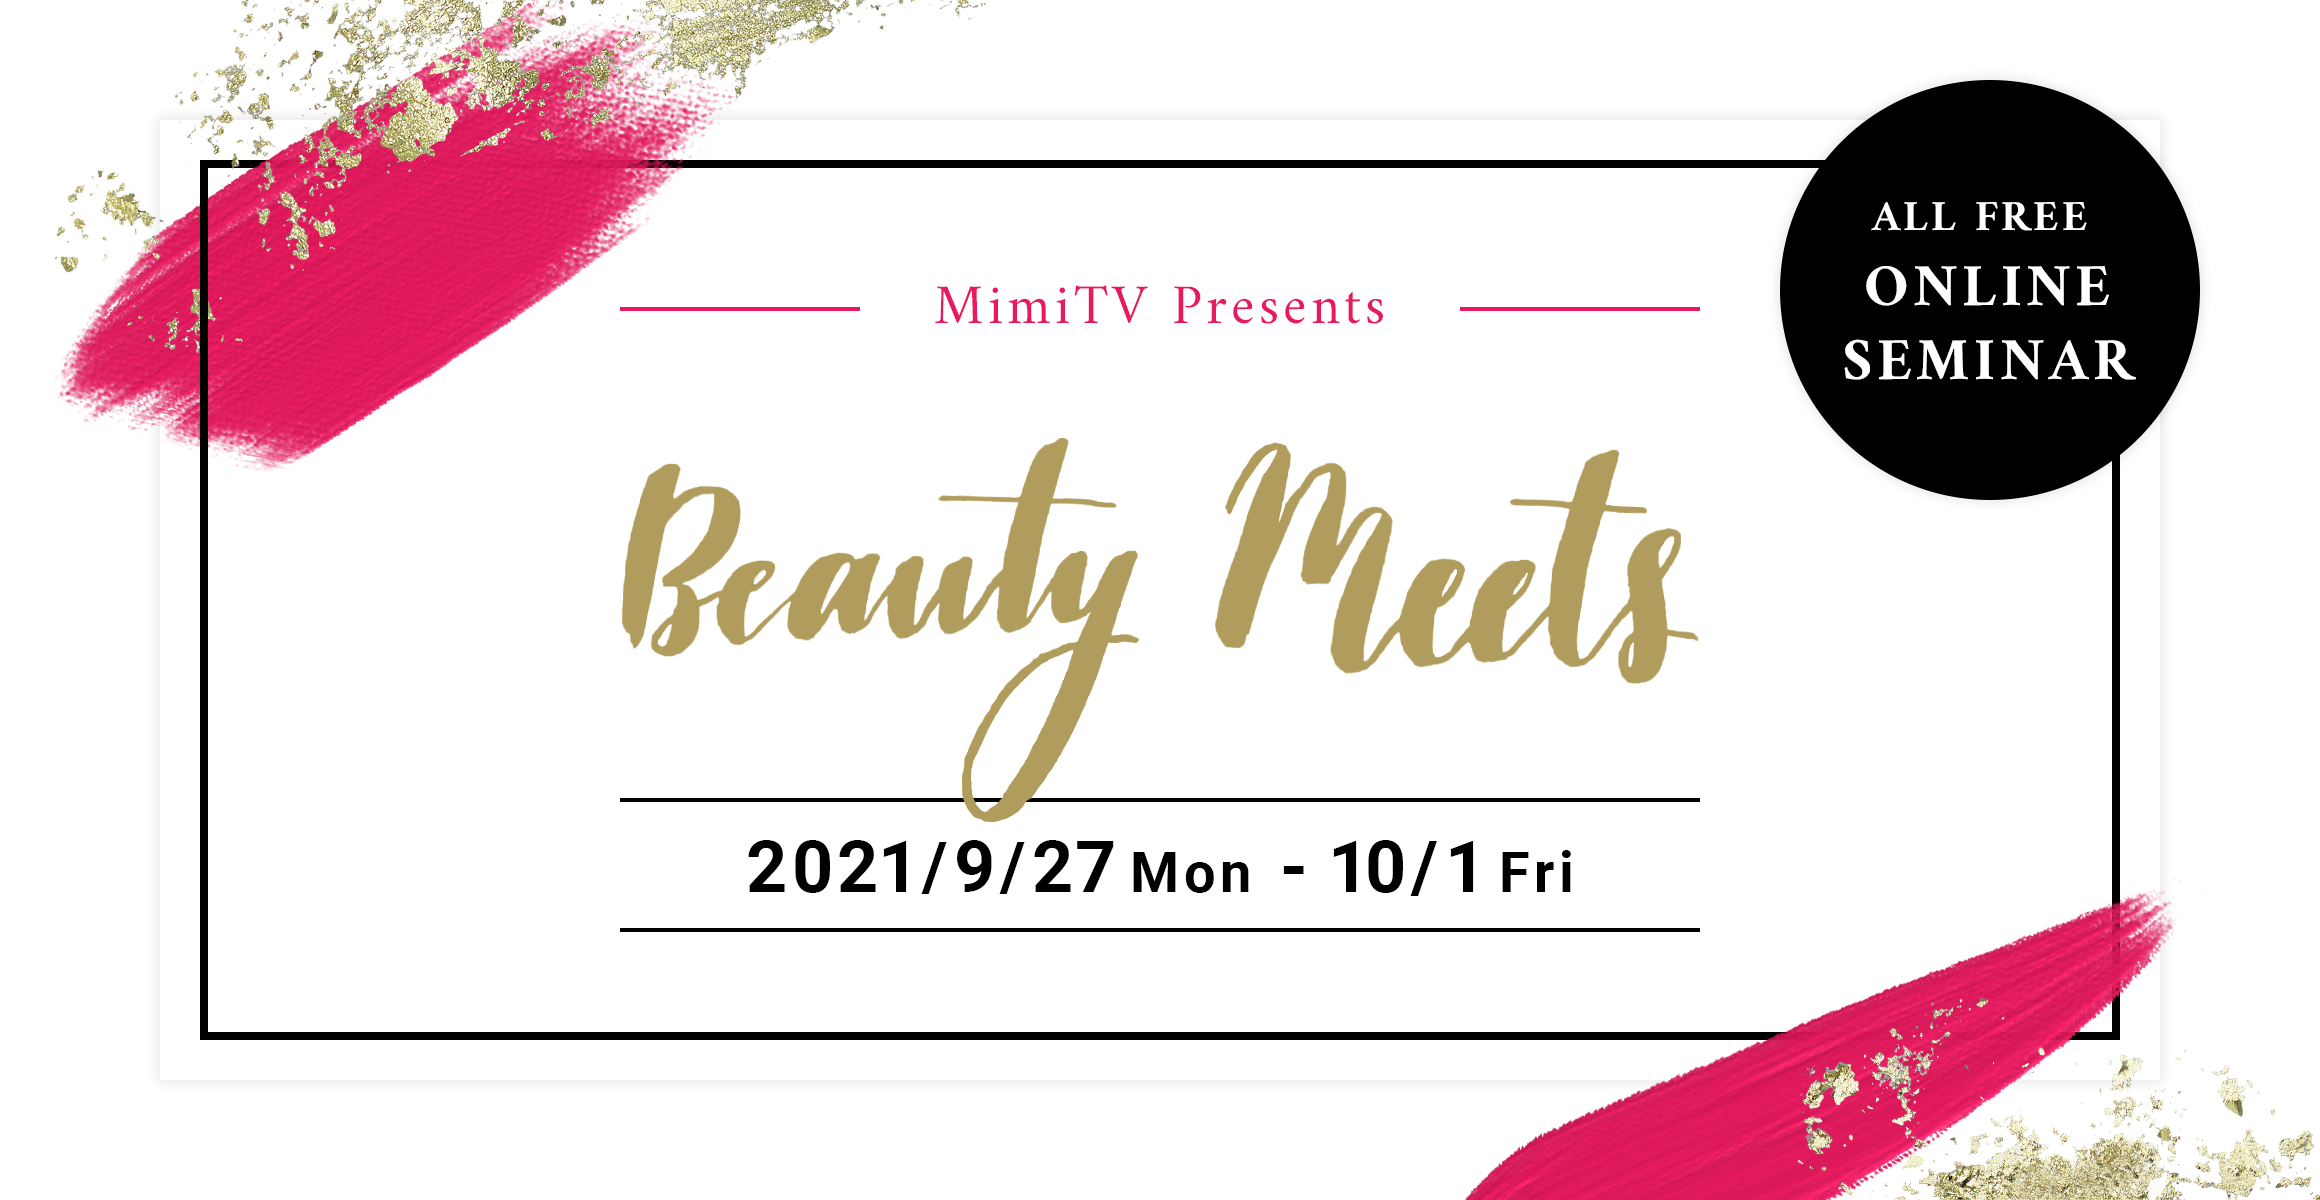 MimiTV Presents Beauty Meets 2021/9/27mon-10/1fri All FREE ONLINE SEMINAR